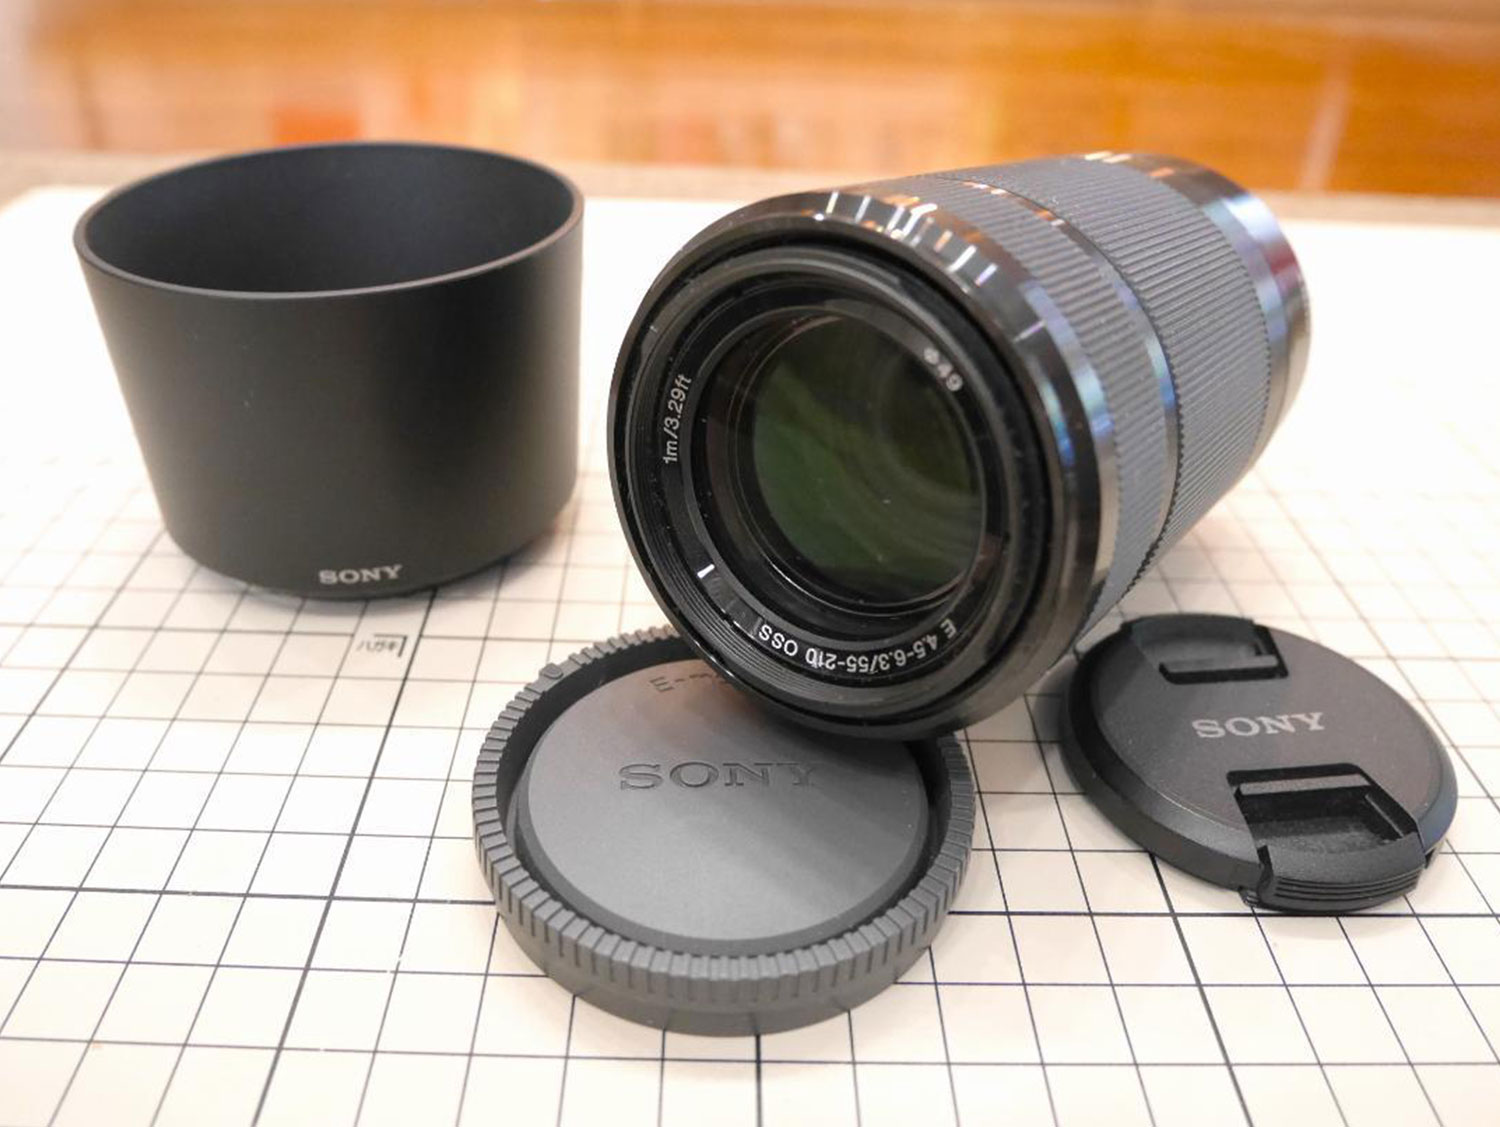 Sony E 55-210mm F4.5-6.3 Lens - Portrait Photography